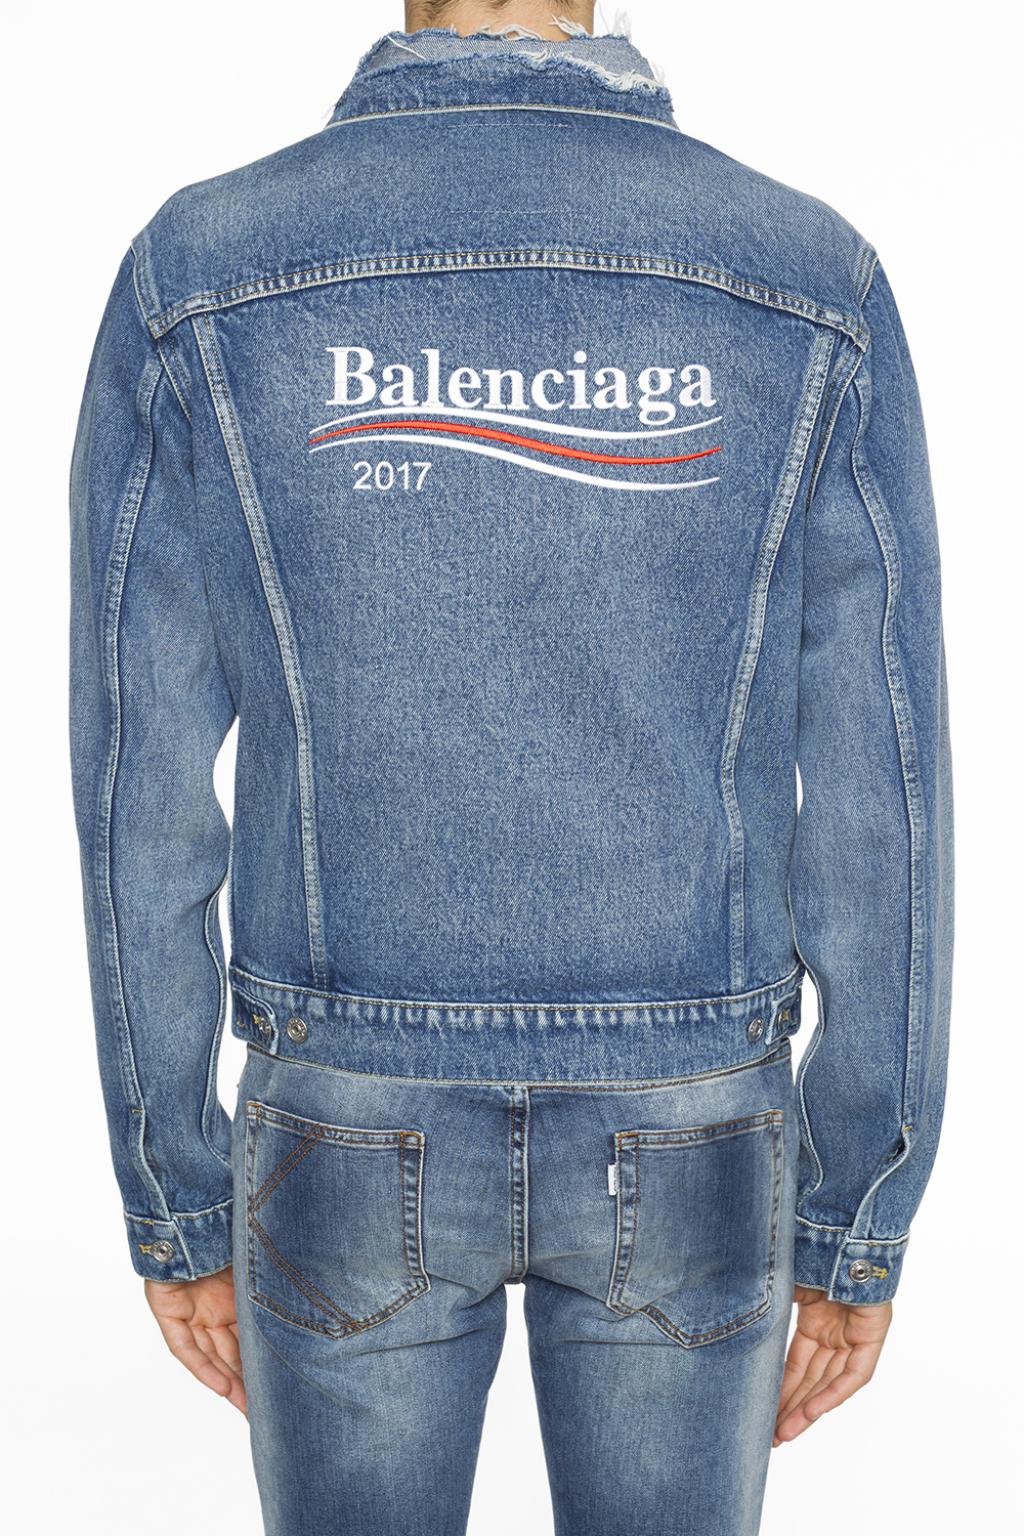 balenciaga jeans jacket 2017